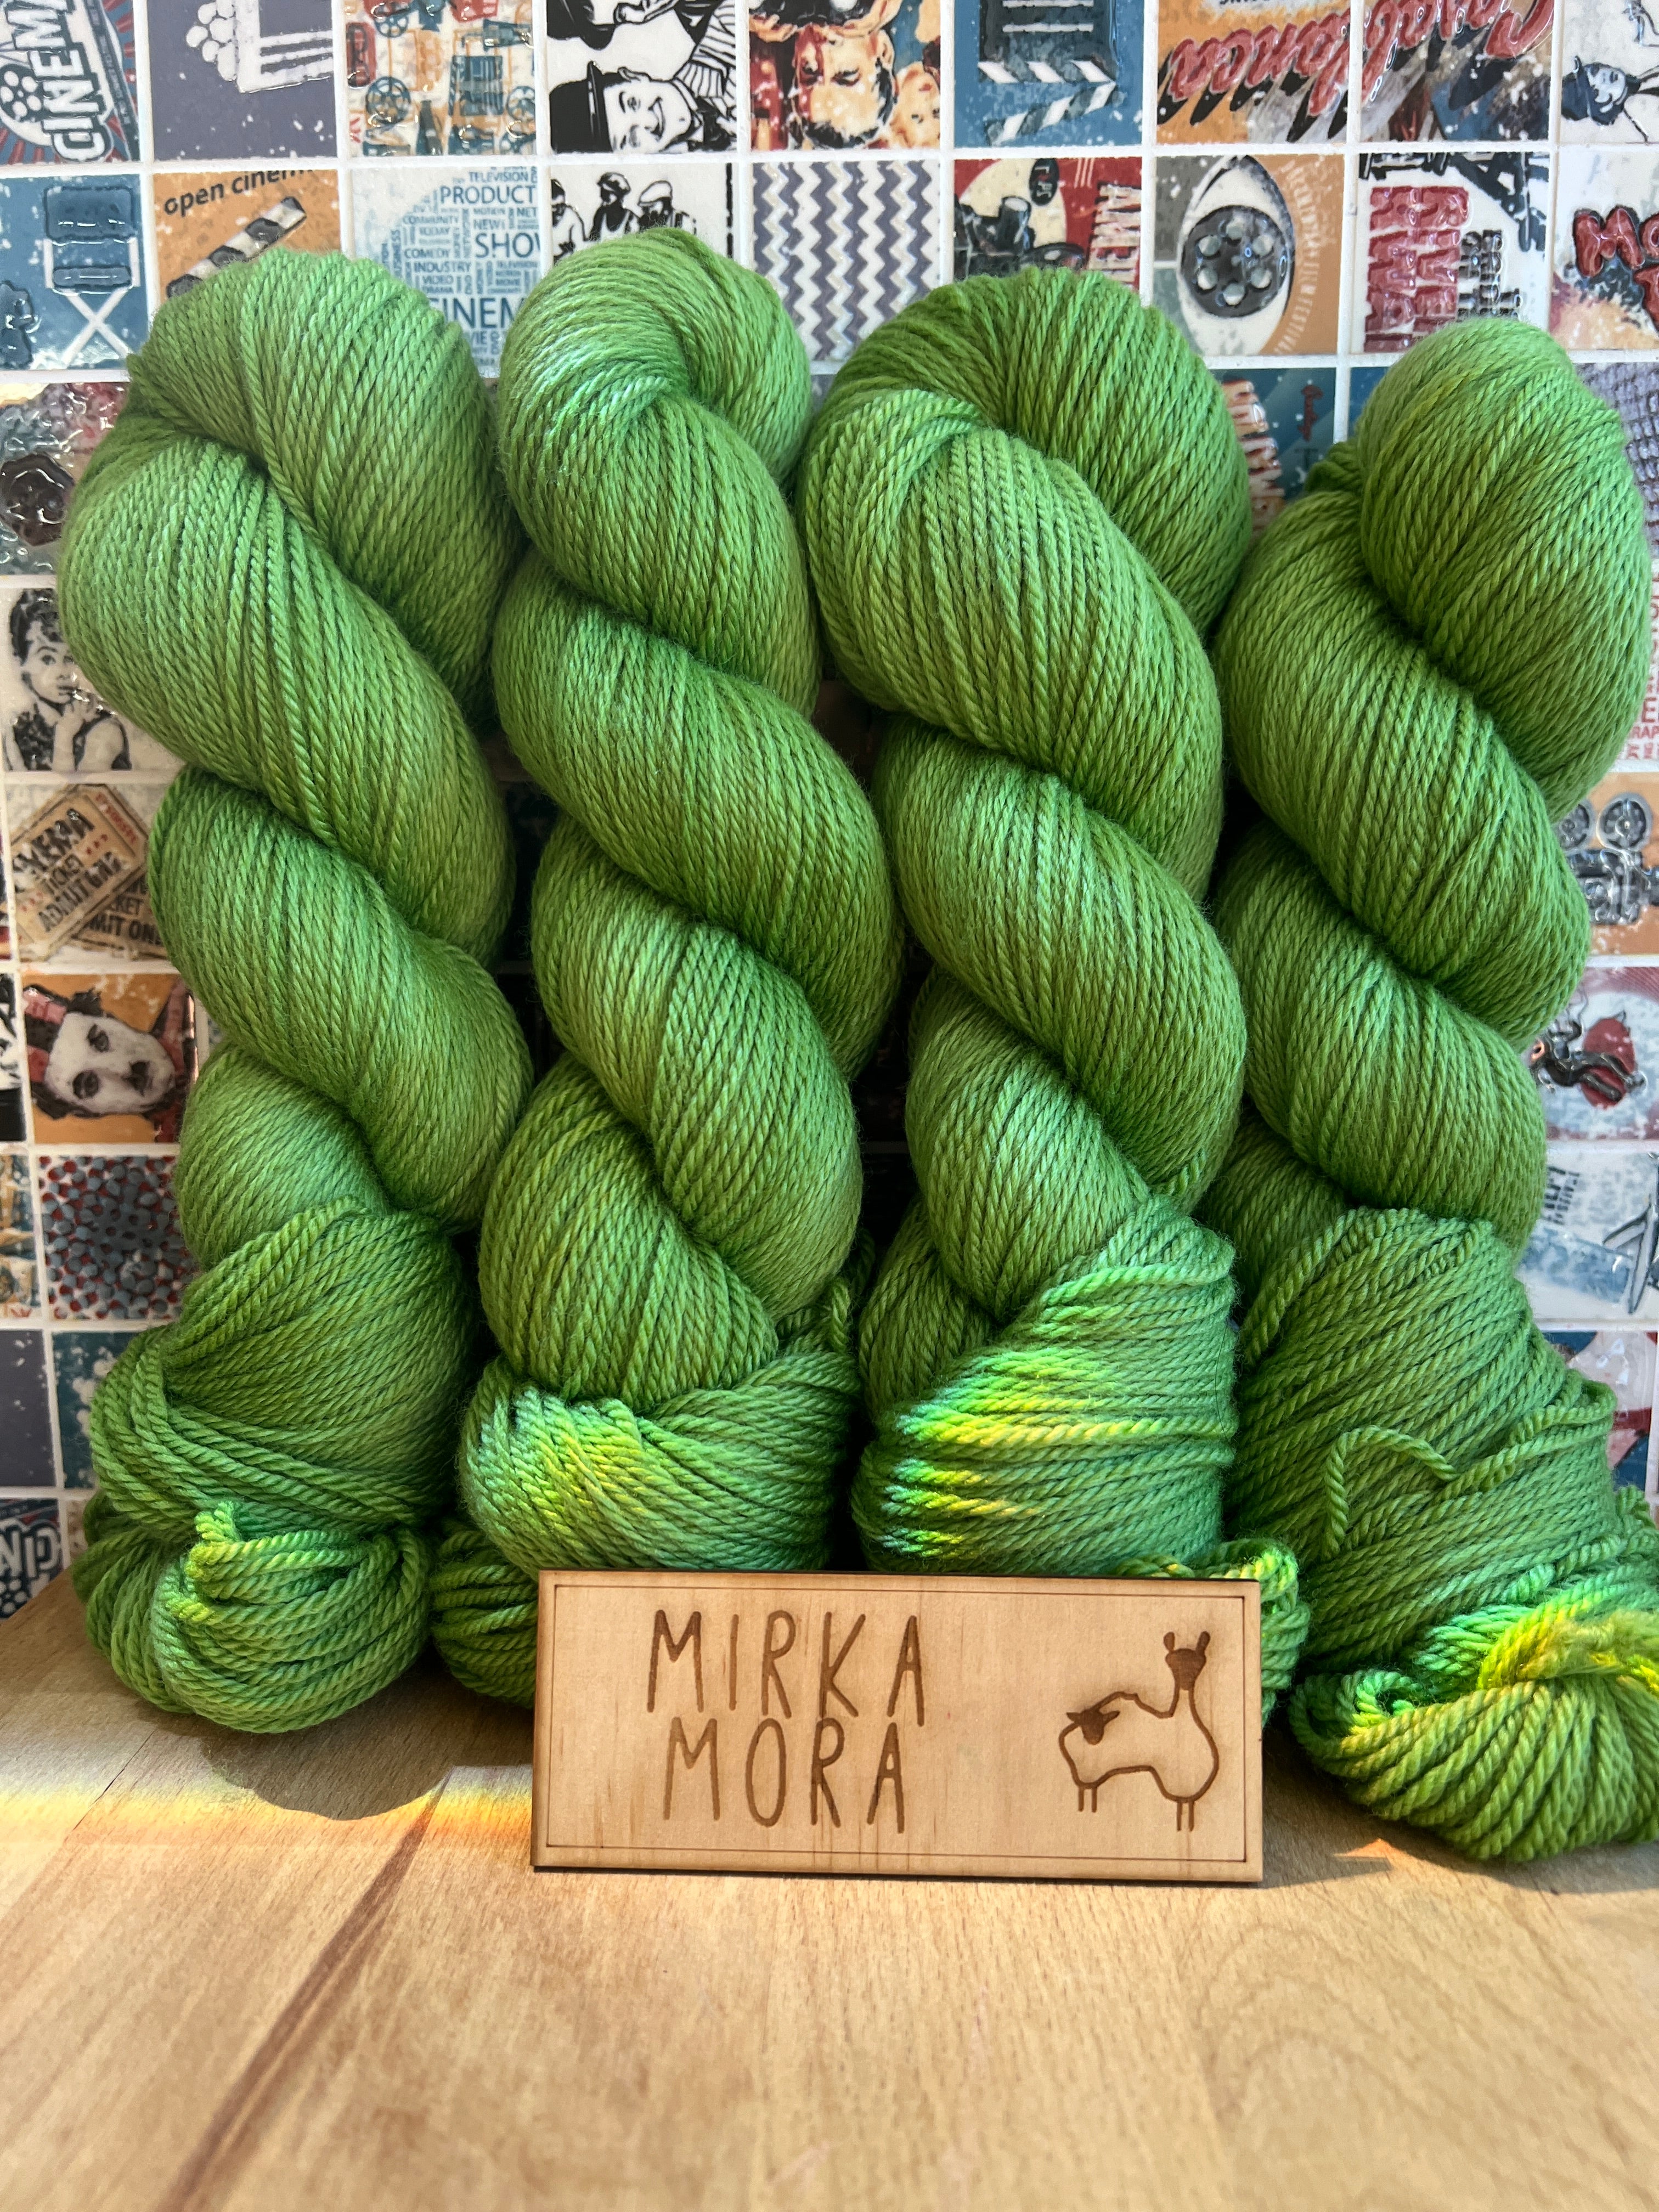 Mirka Mora - 100% Australian SRS Merino (Non-Mulesed) : Nylon